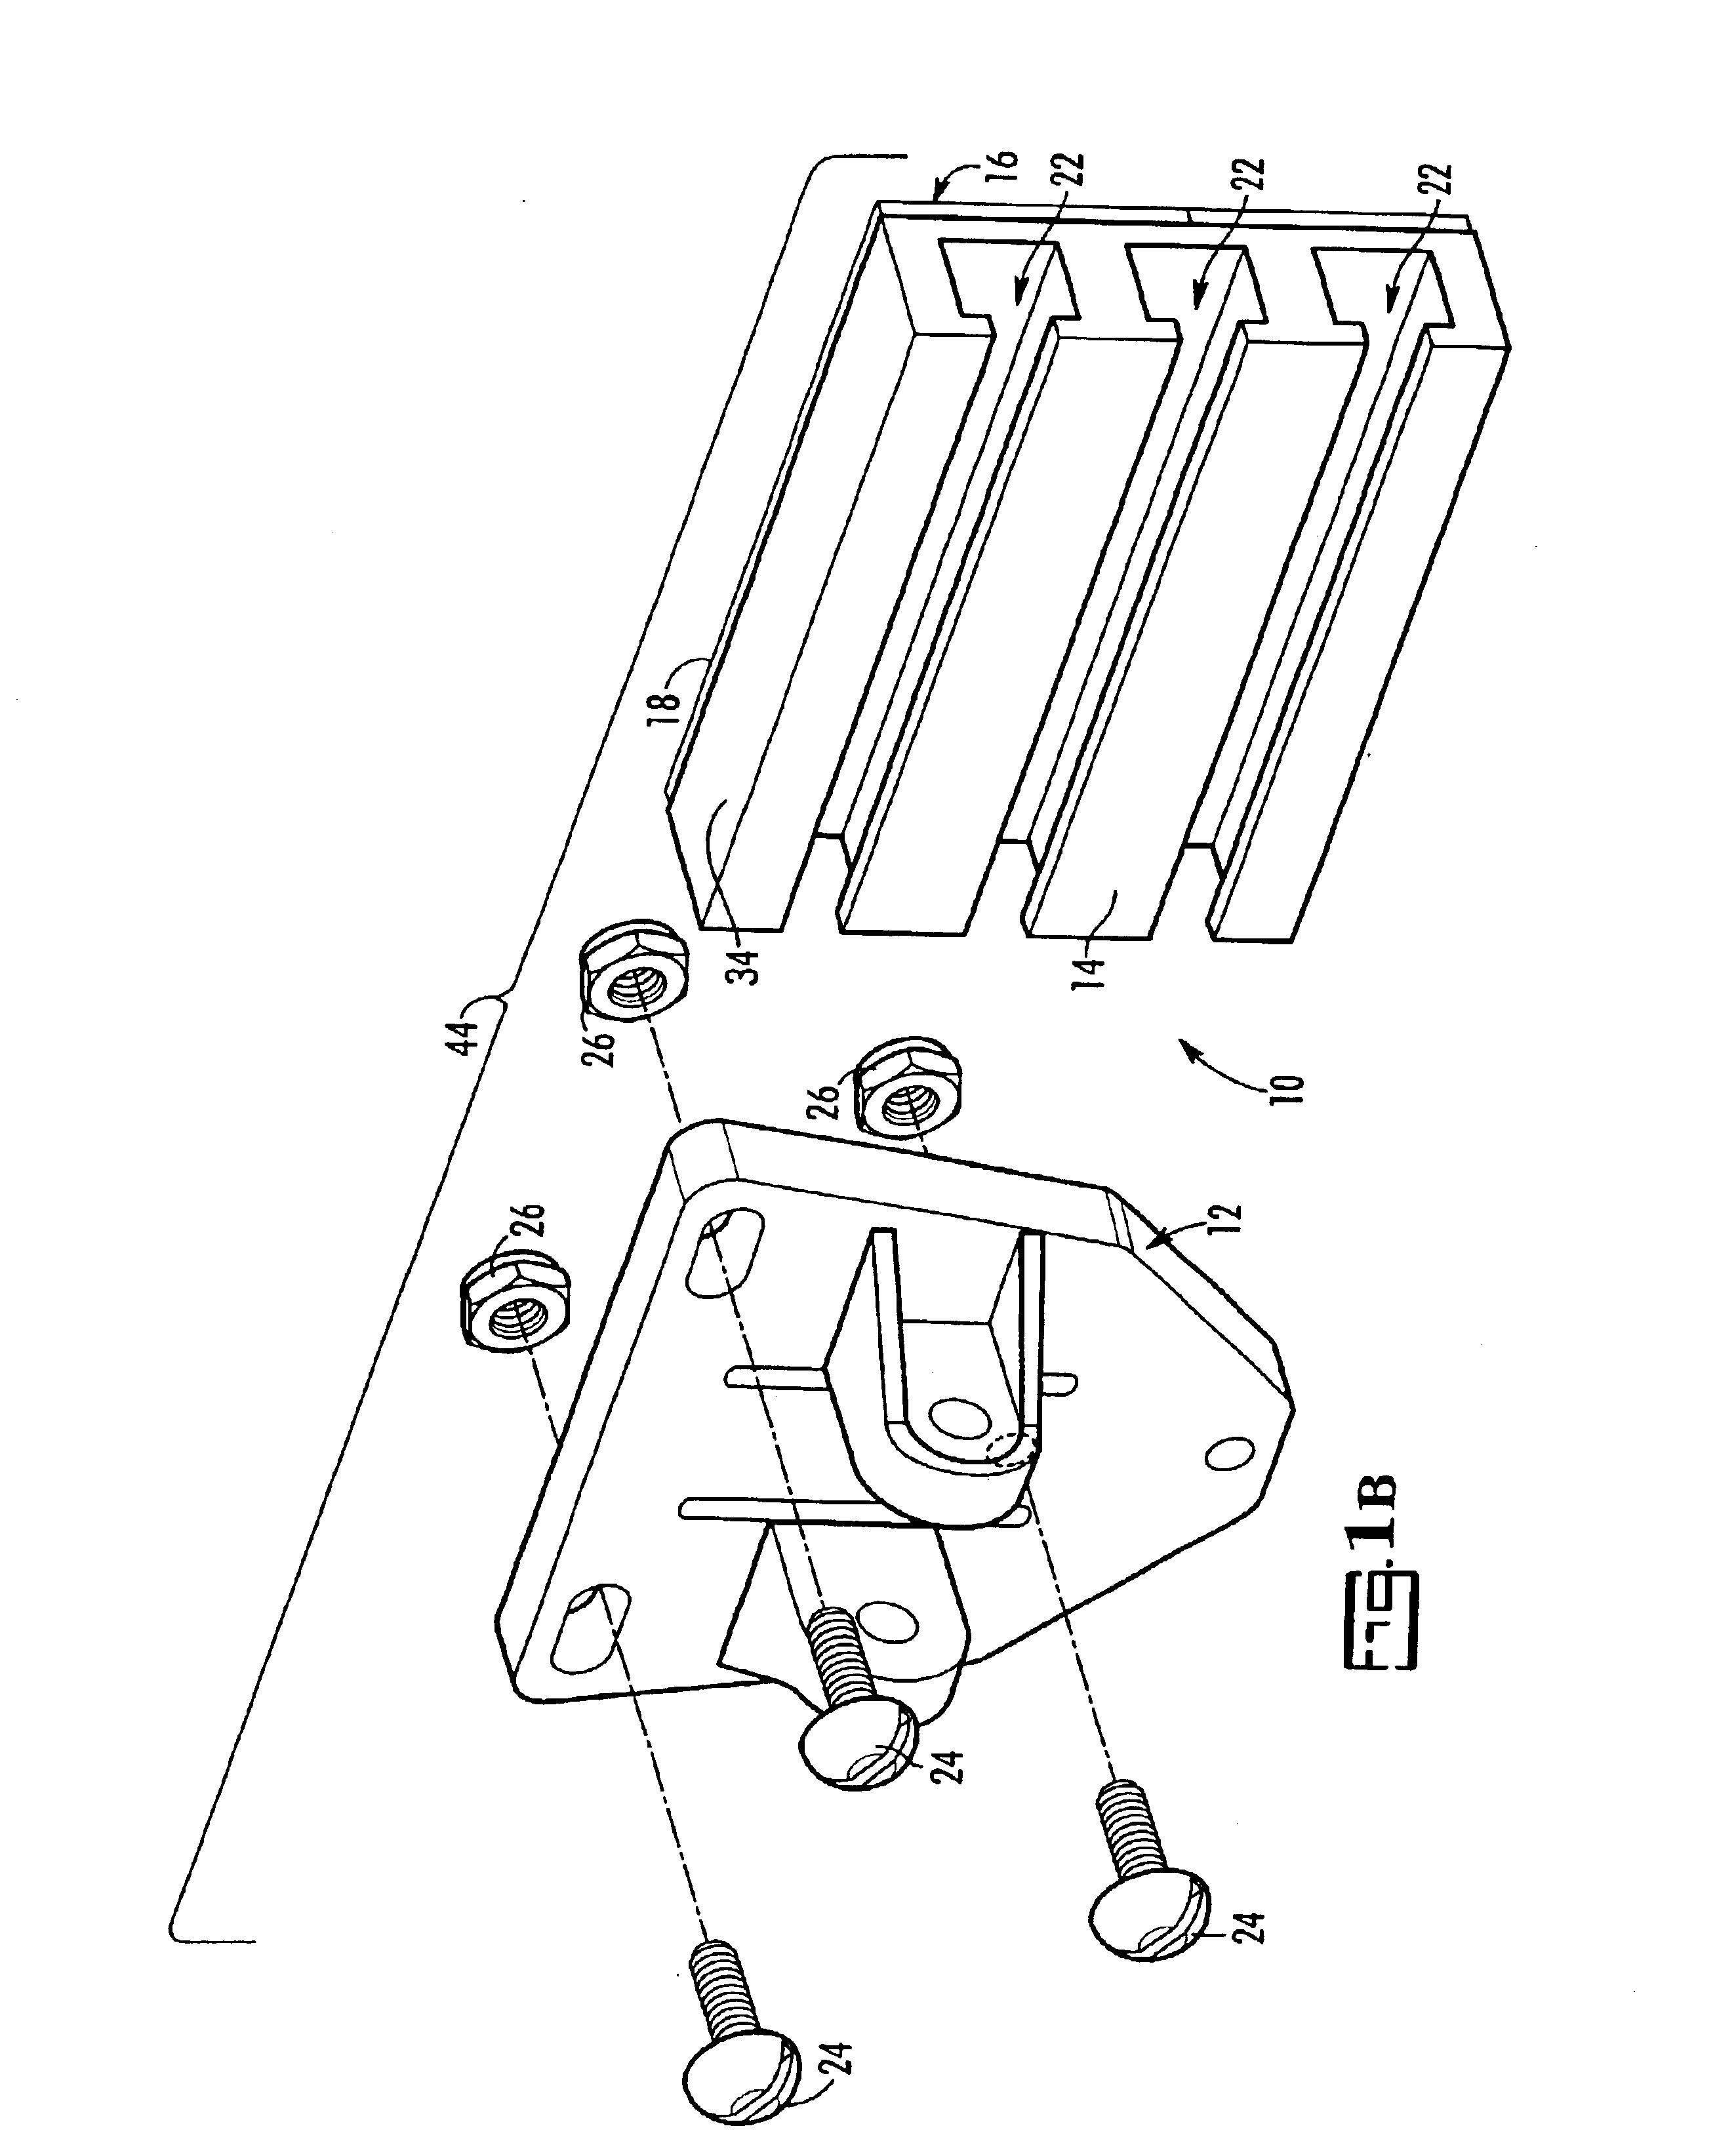 Transducer mounting block